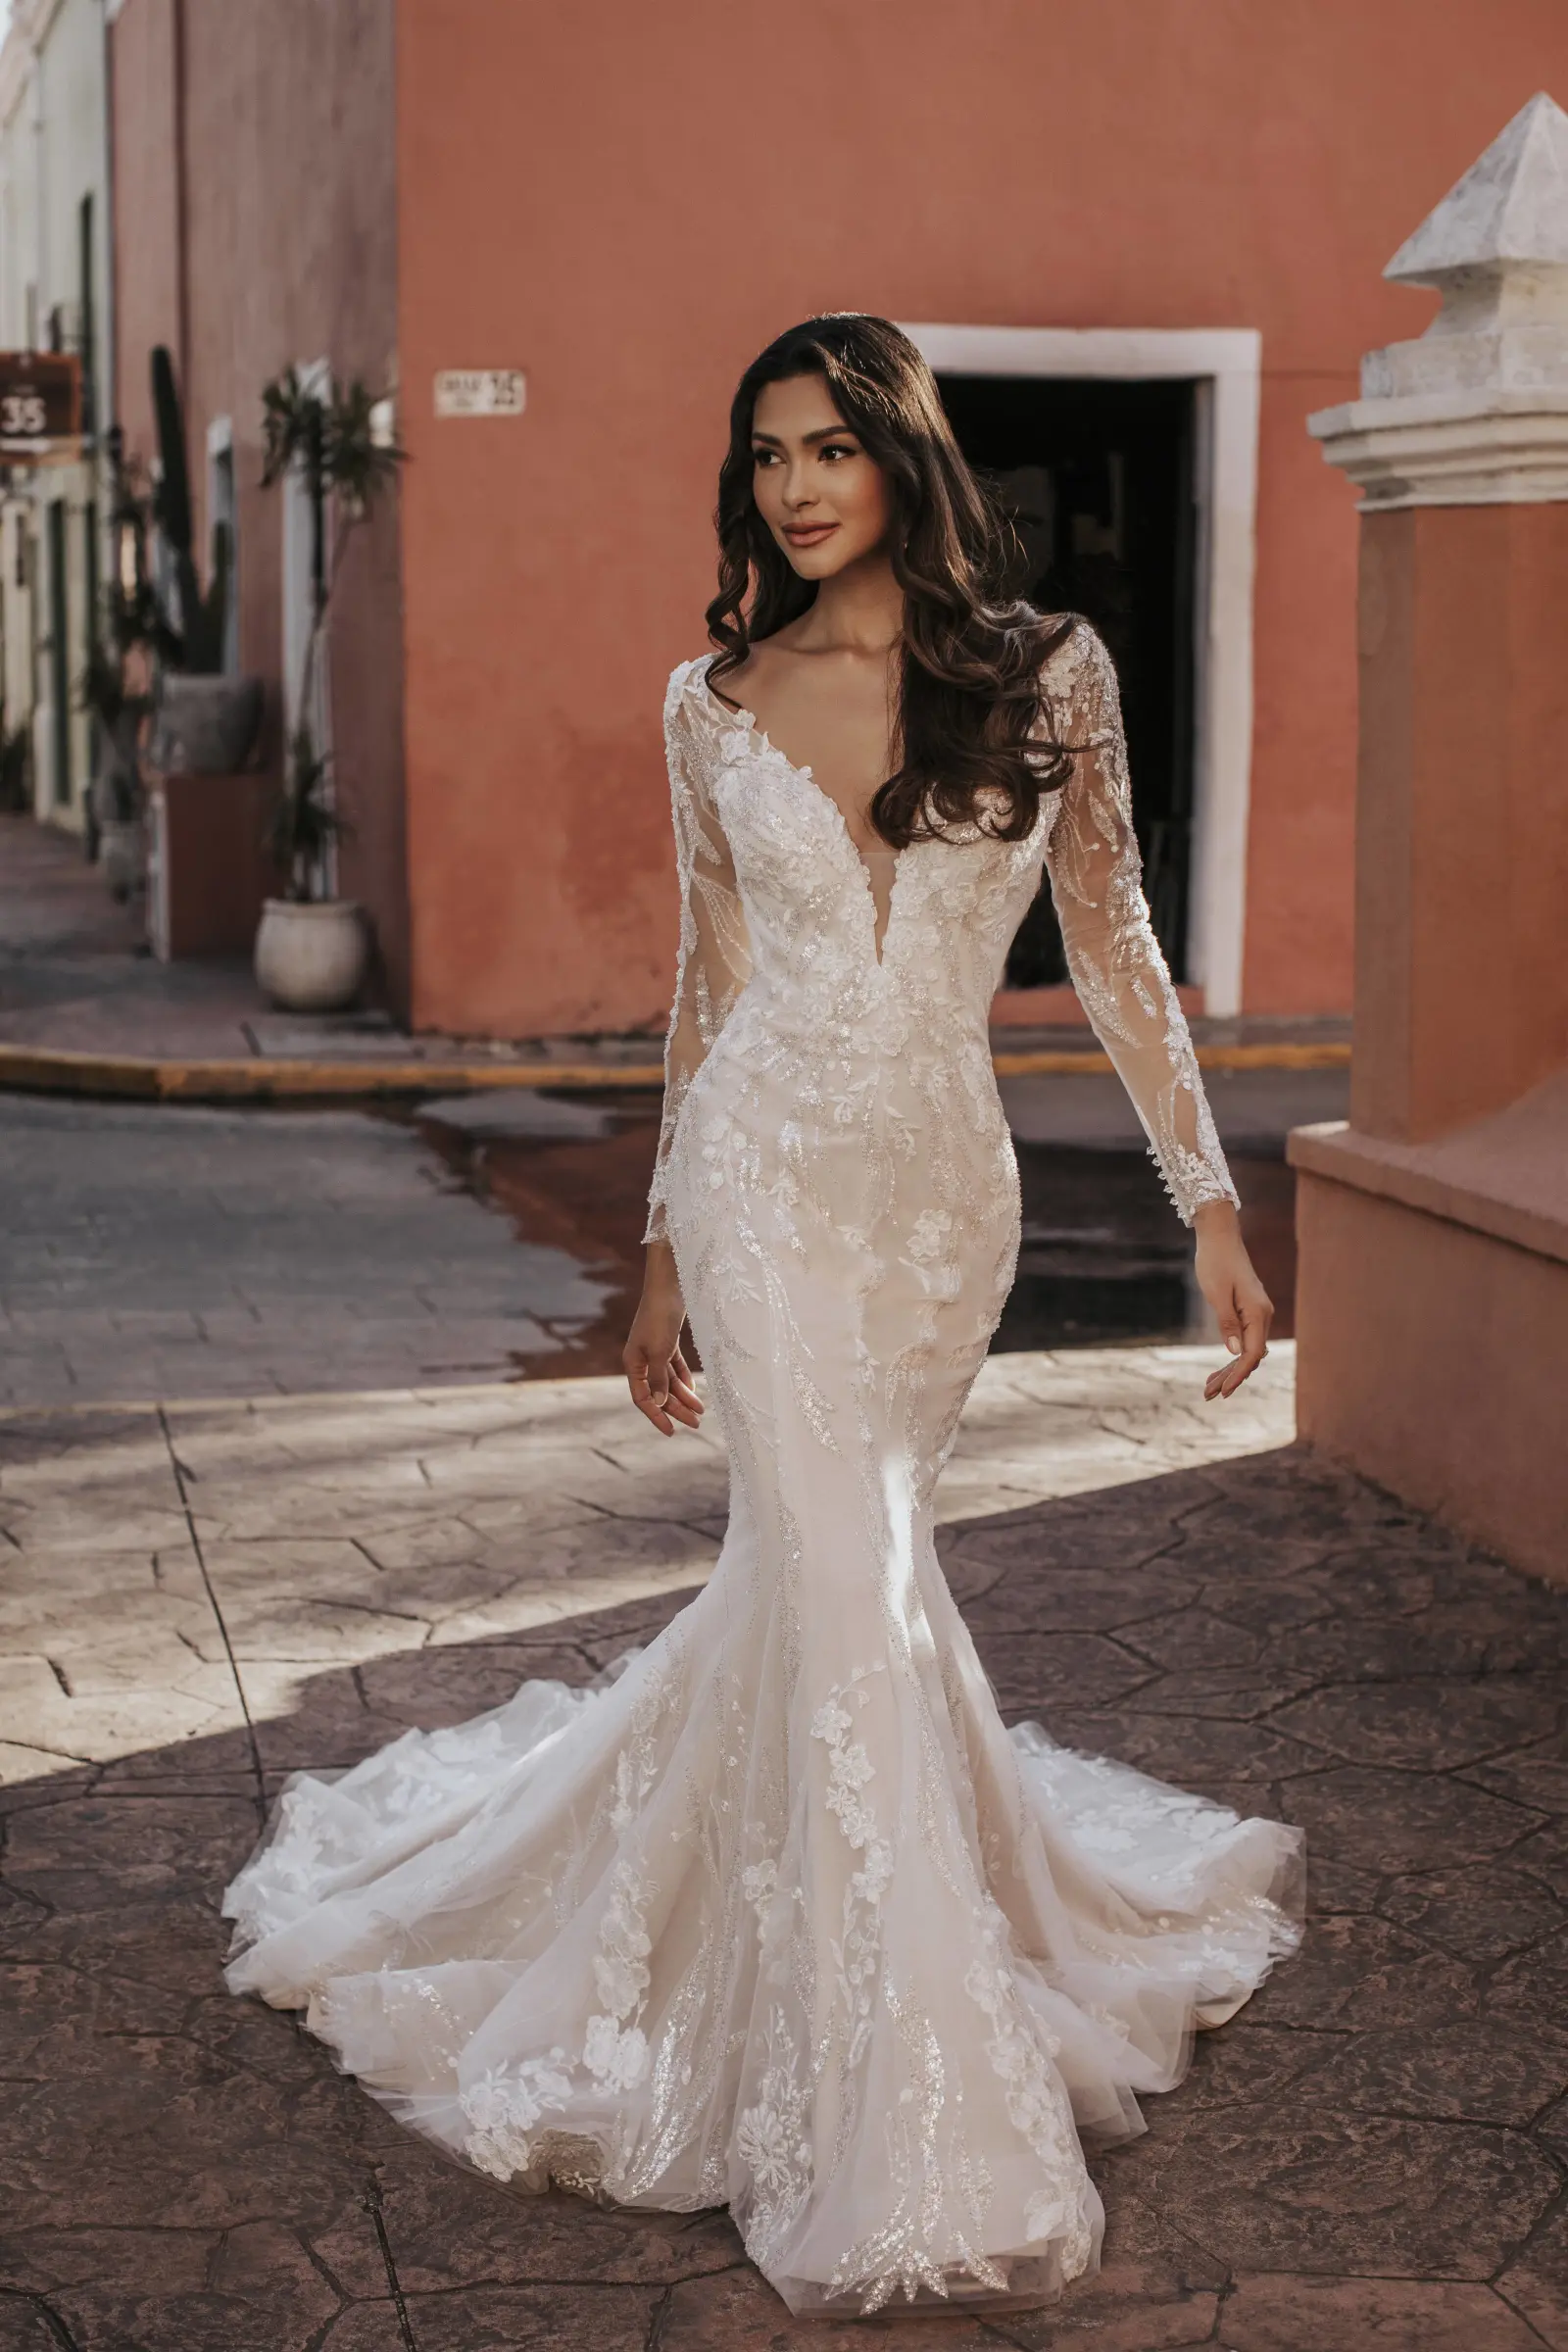 Long-Sleeve Wedding Dresses: Timeless & Elegant Designs